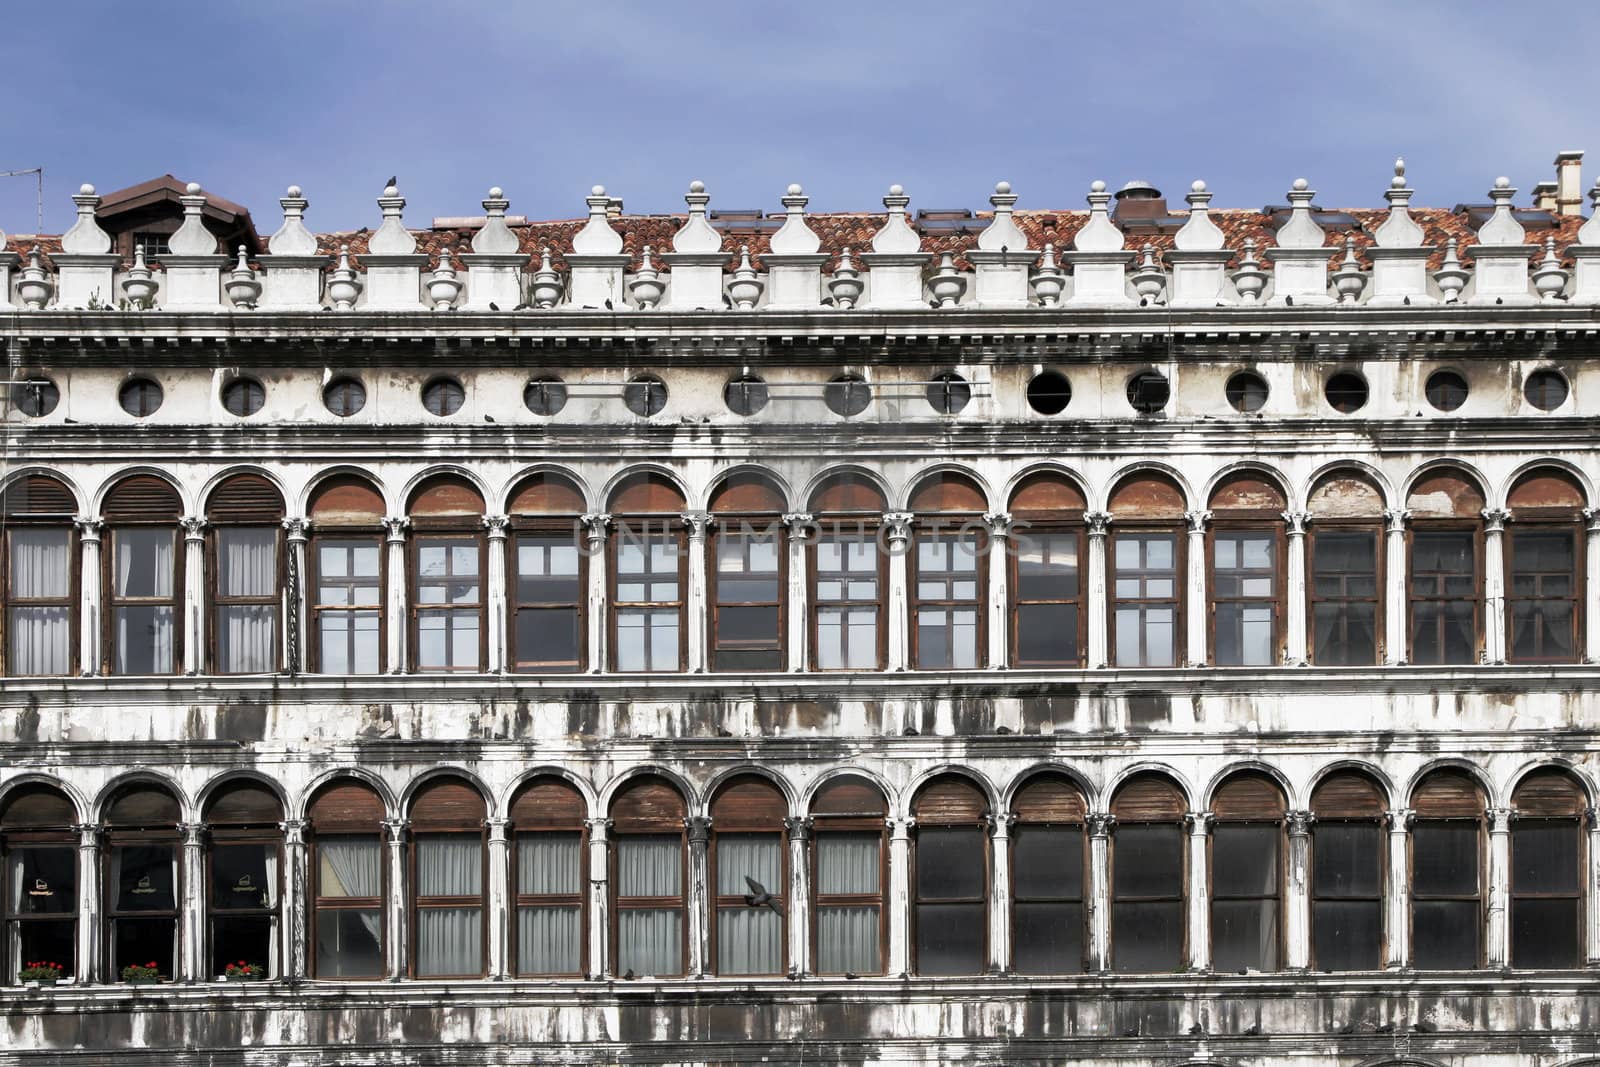 Piazza San Marco, Old Building Front Facade - Venice, Italy